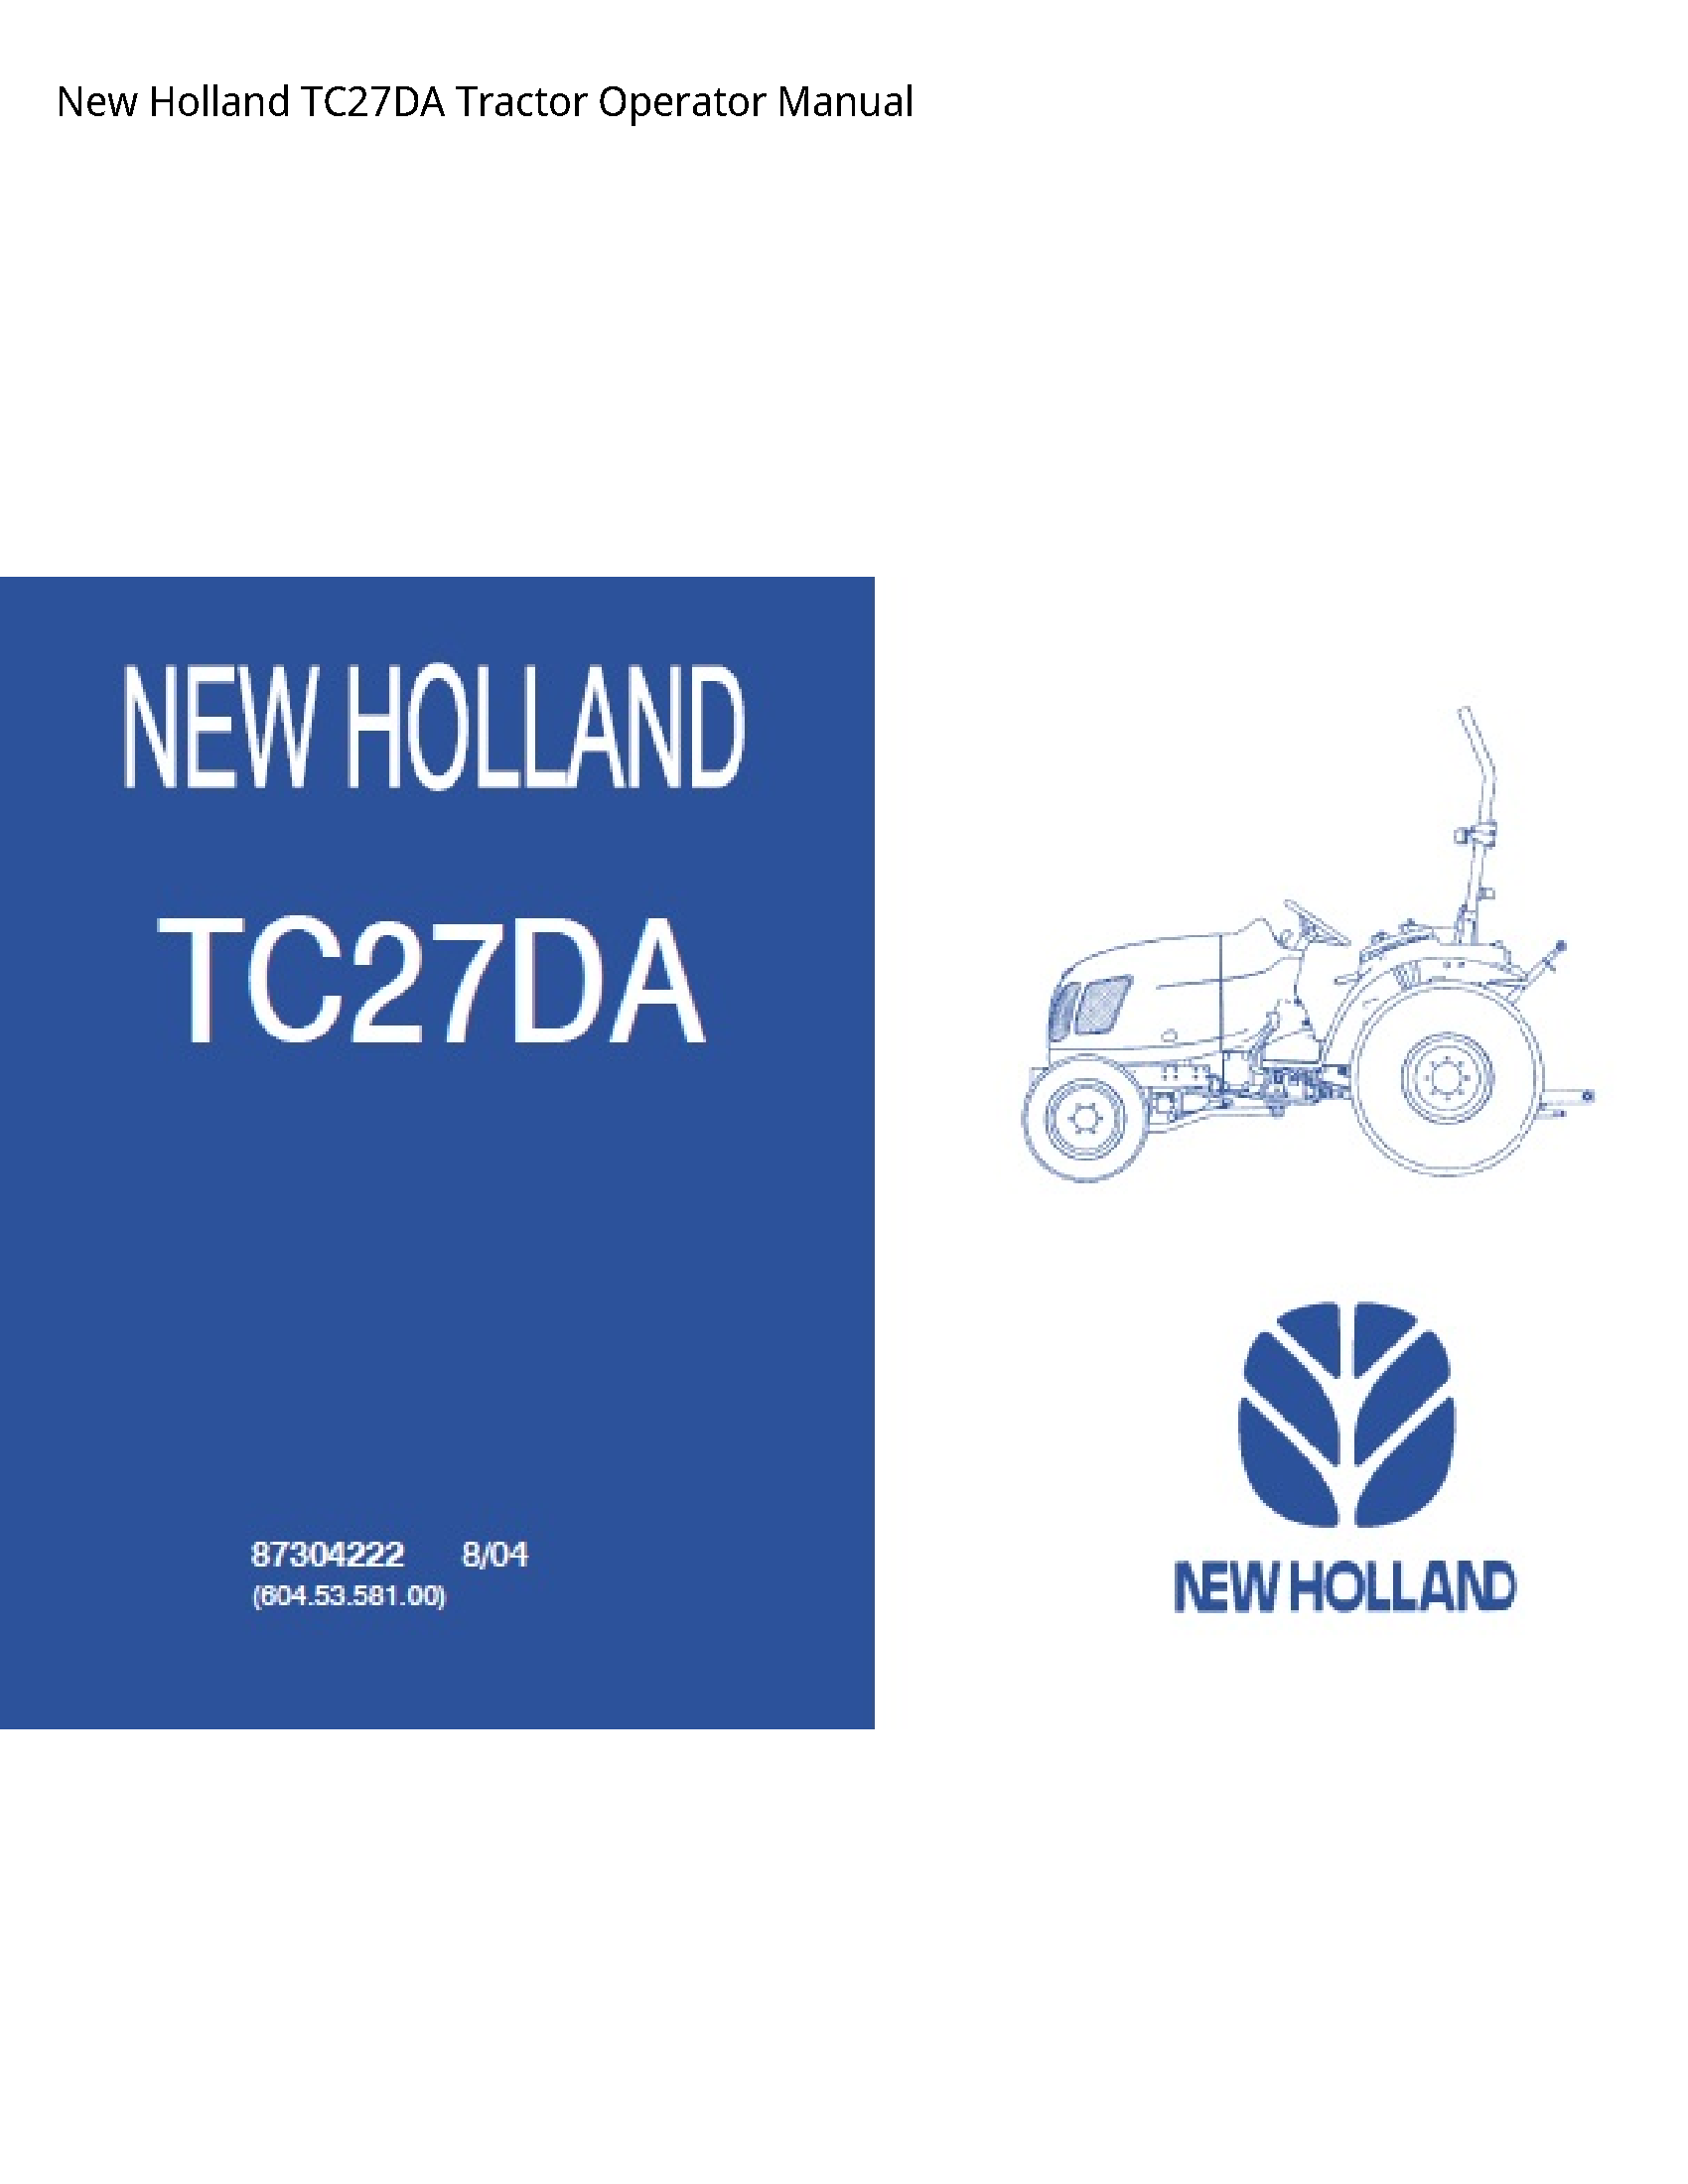 New Holland TC27DA Tractor Operator manual